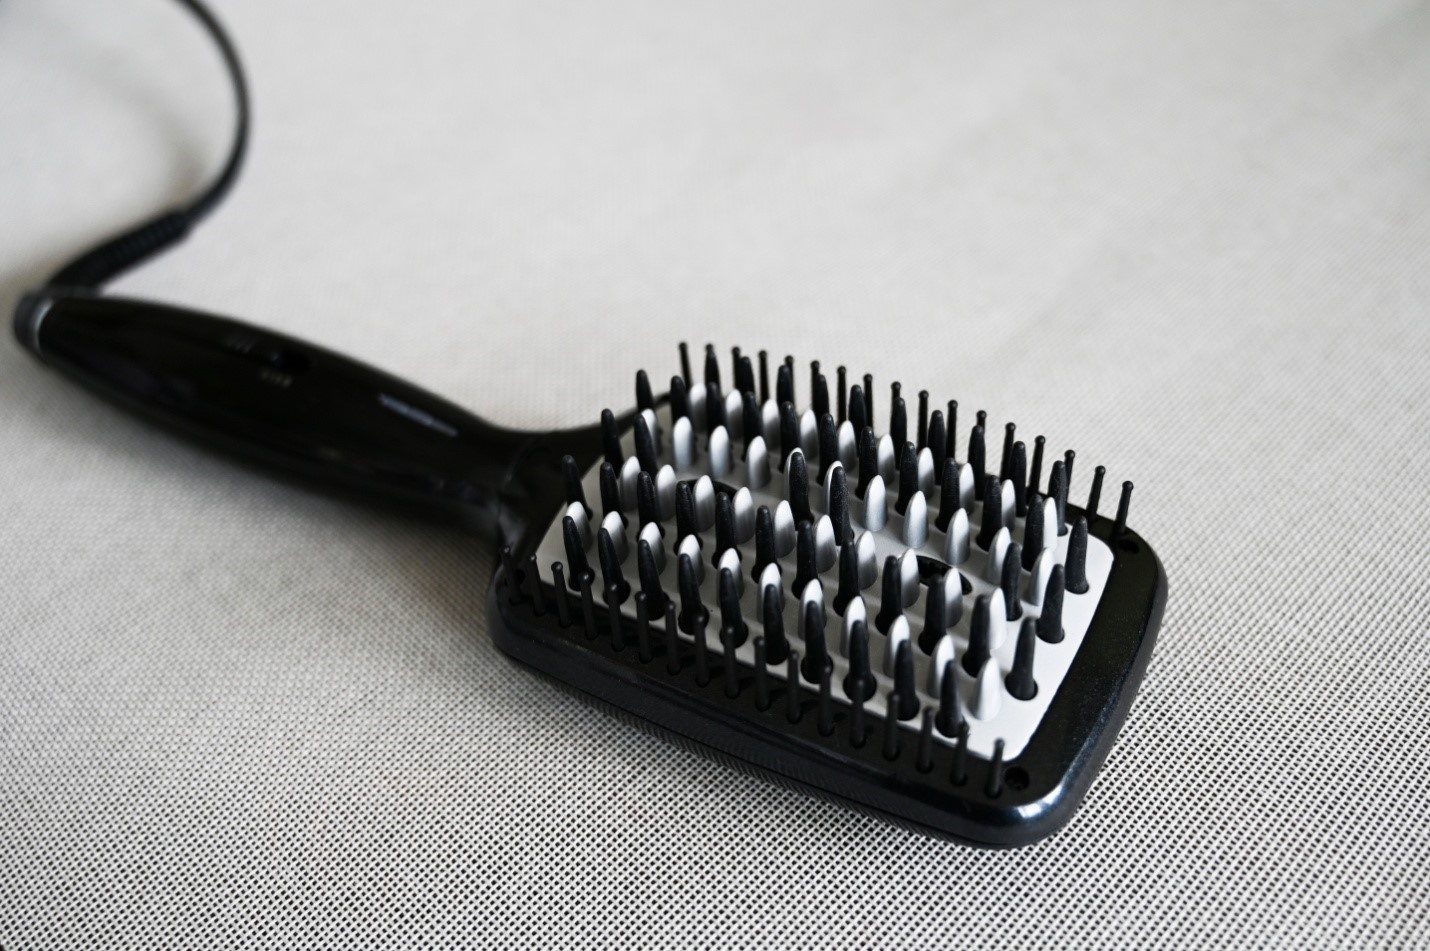 Hair Straightening Brush for Busy-Girls-On-the-Go 6